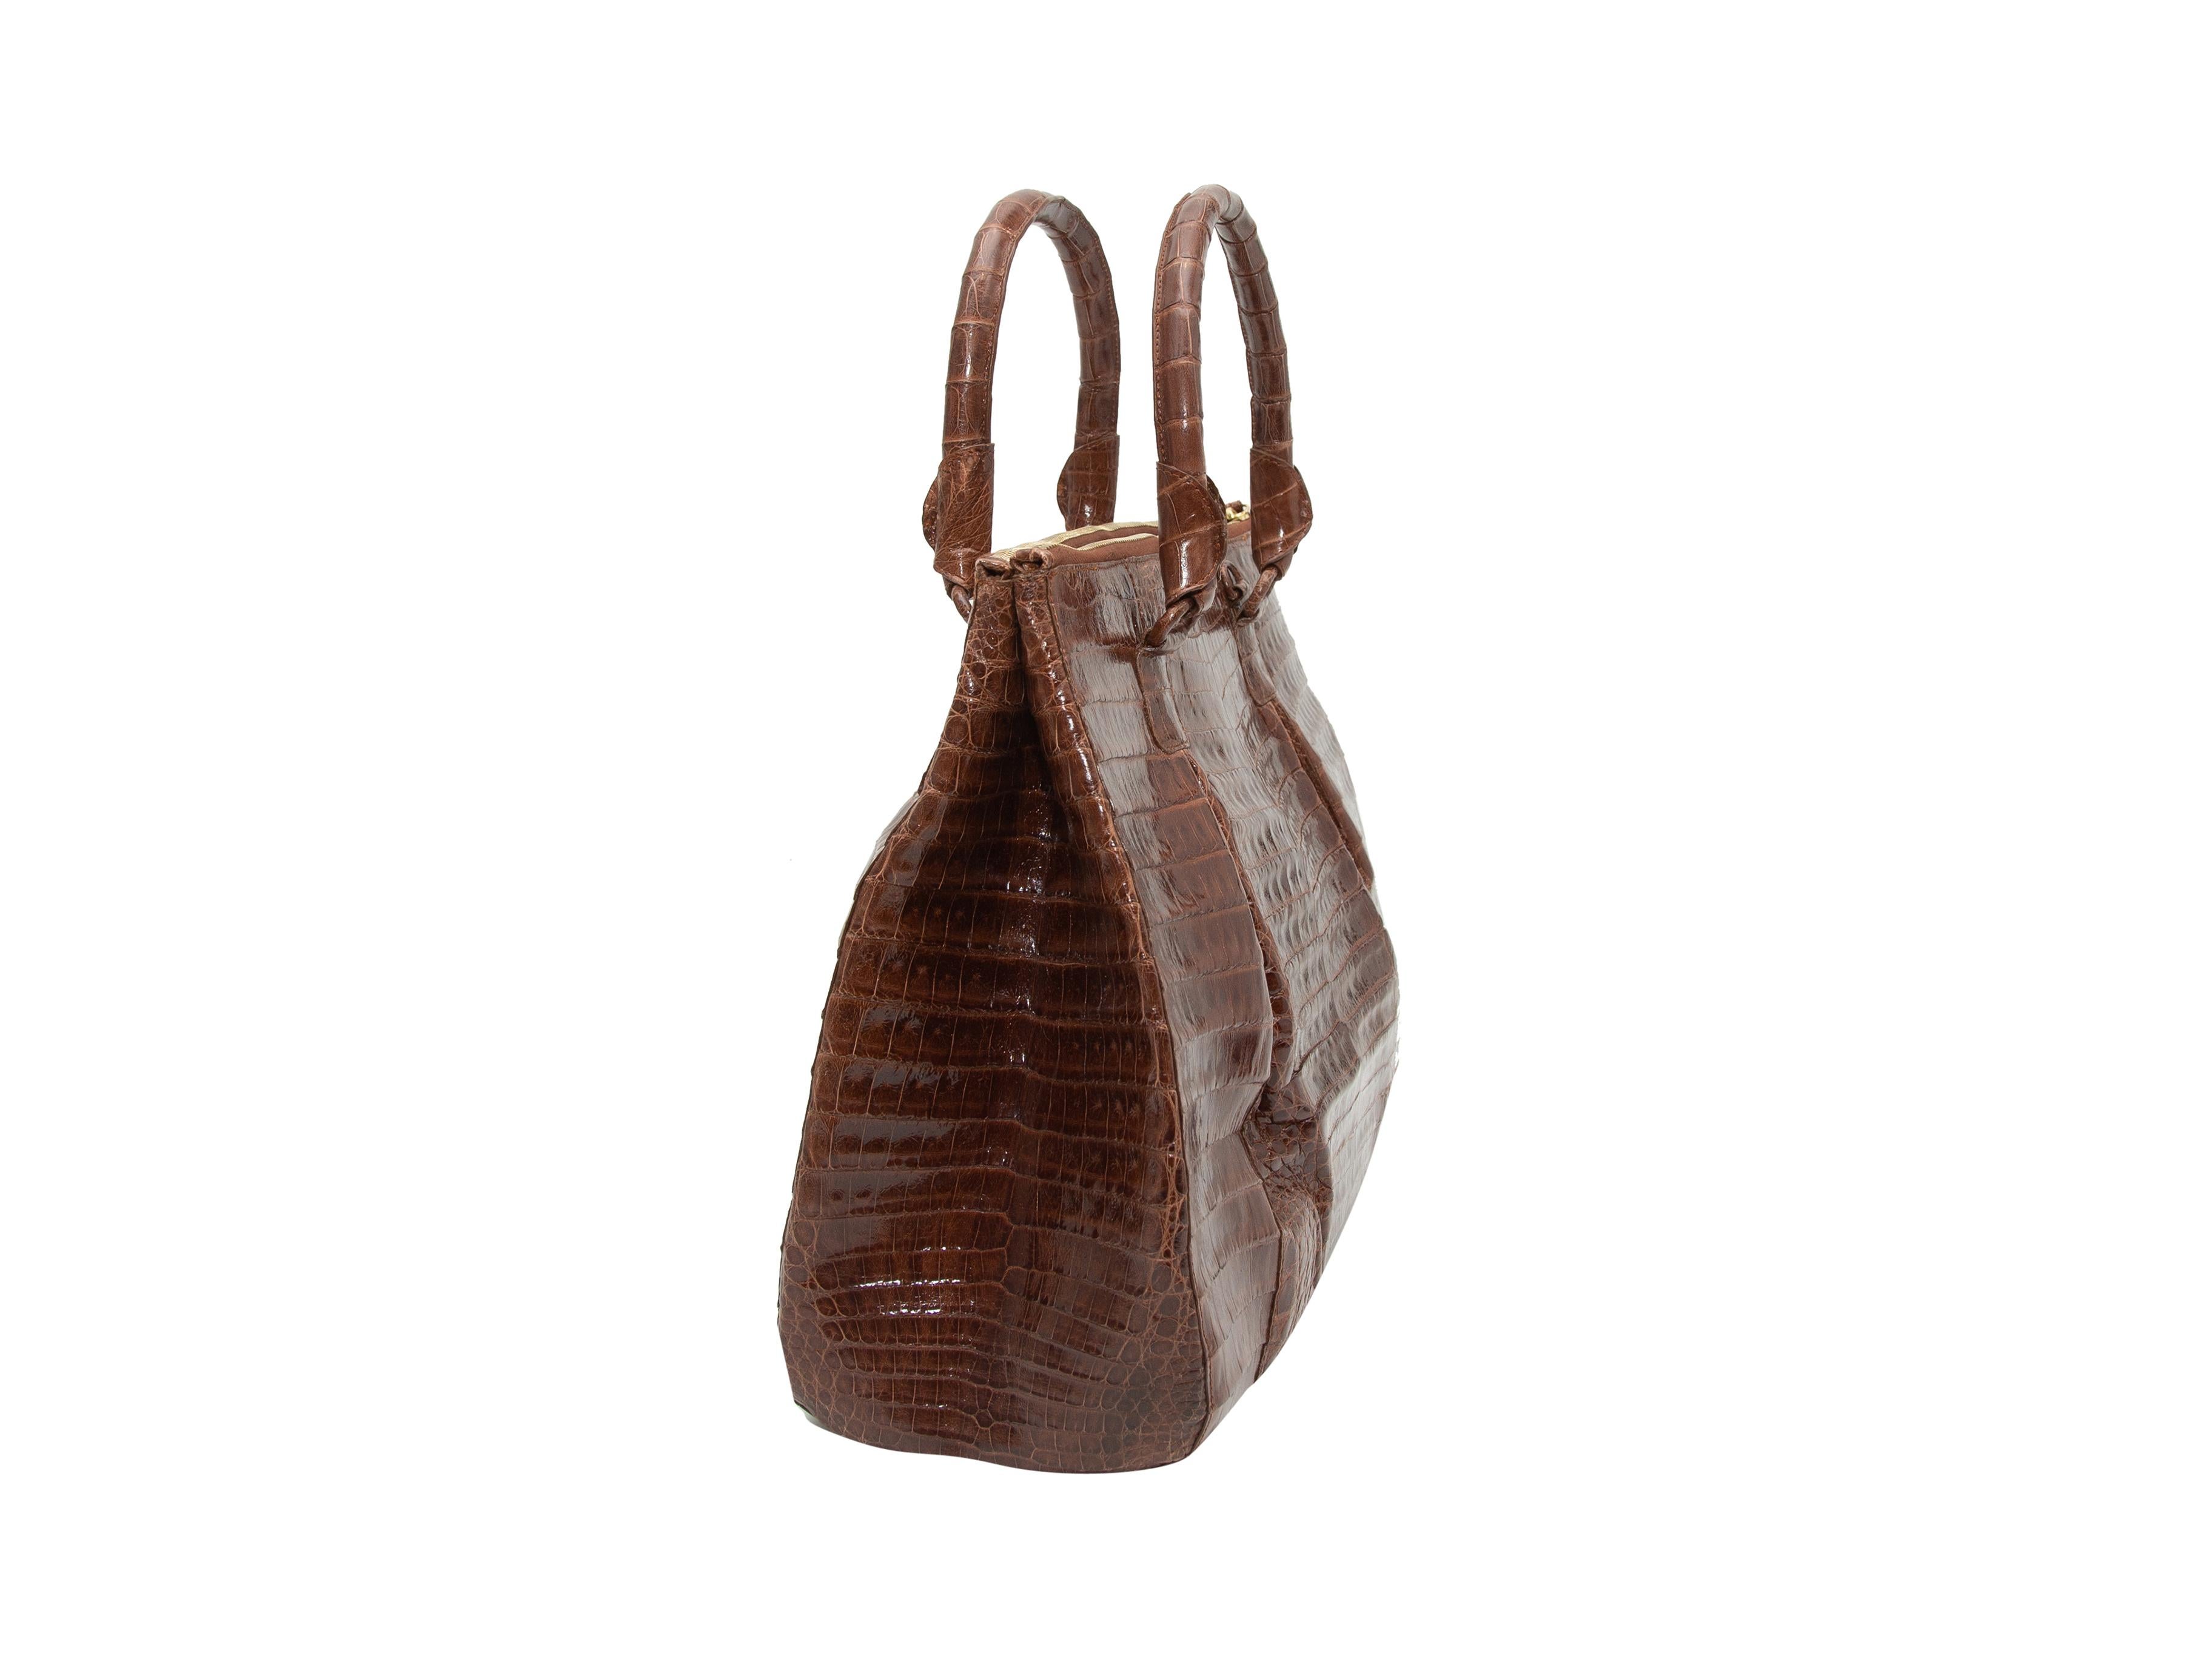 Product details: Brown alligator handbag by Nancy Gonzalez. Dual rolled top handles. Optional shoulder strap. Zip closure at top. 13